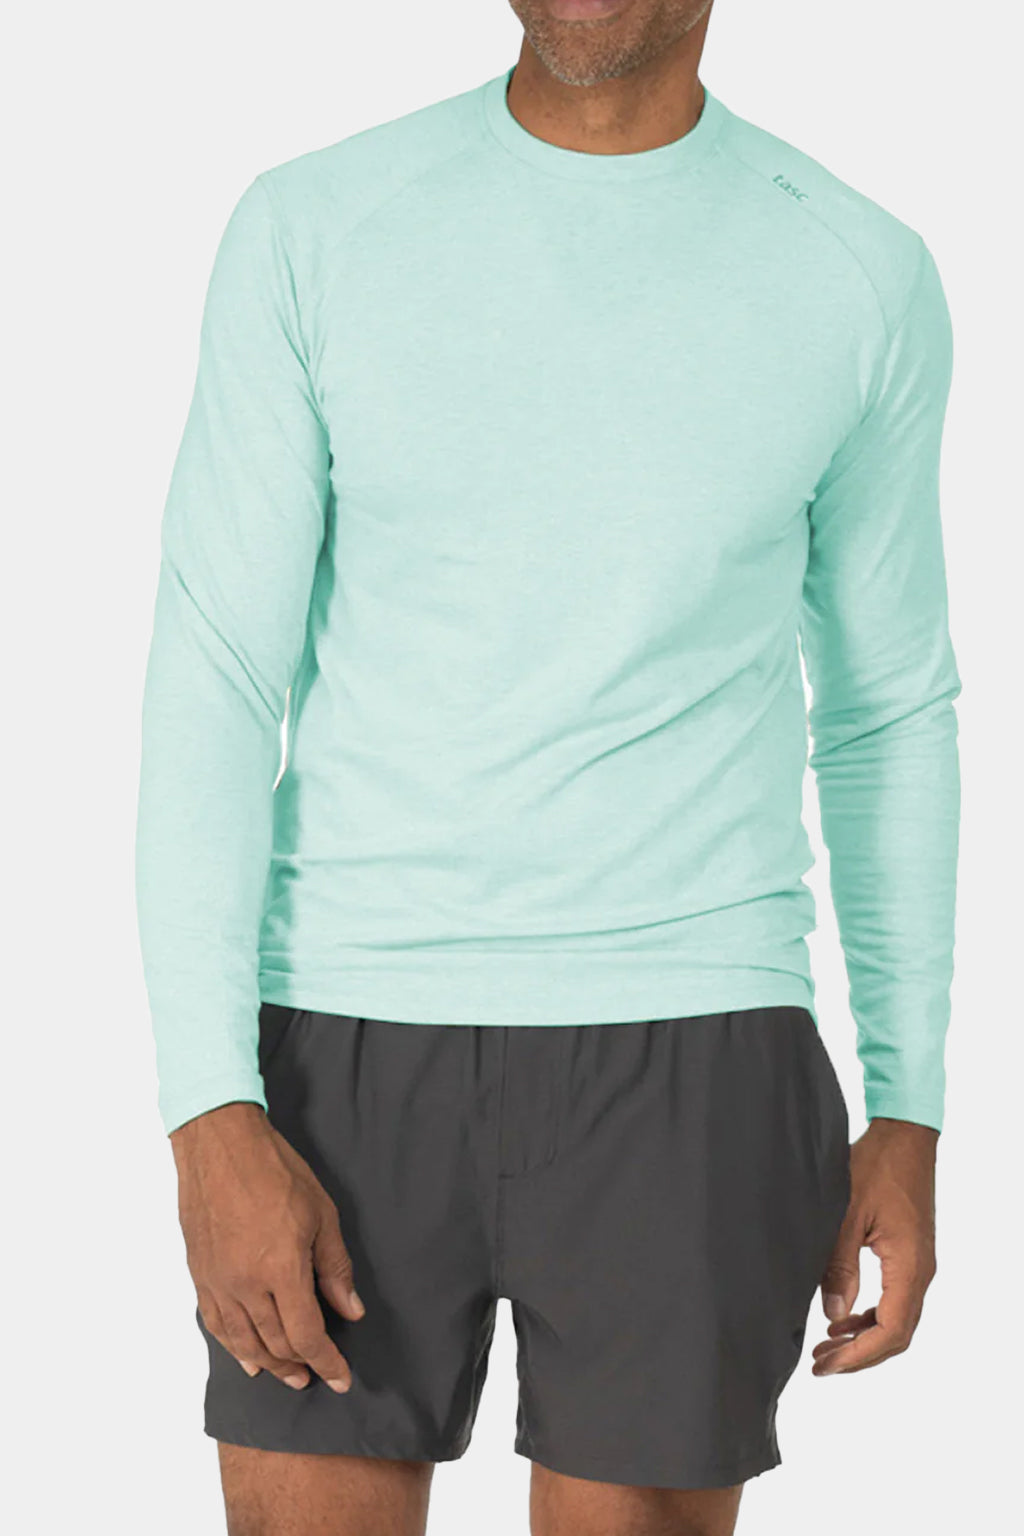 Tasc - Carrollton Long Sleeve Fitness T-shirt